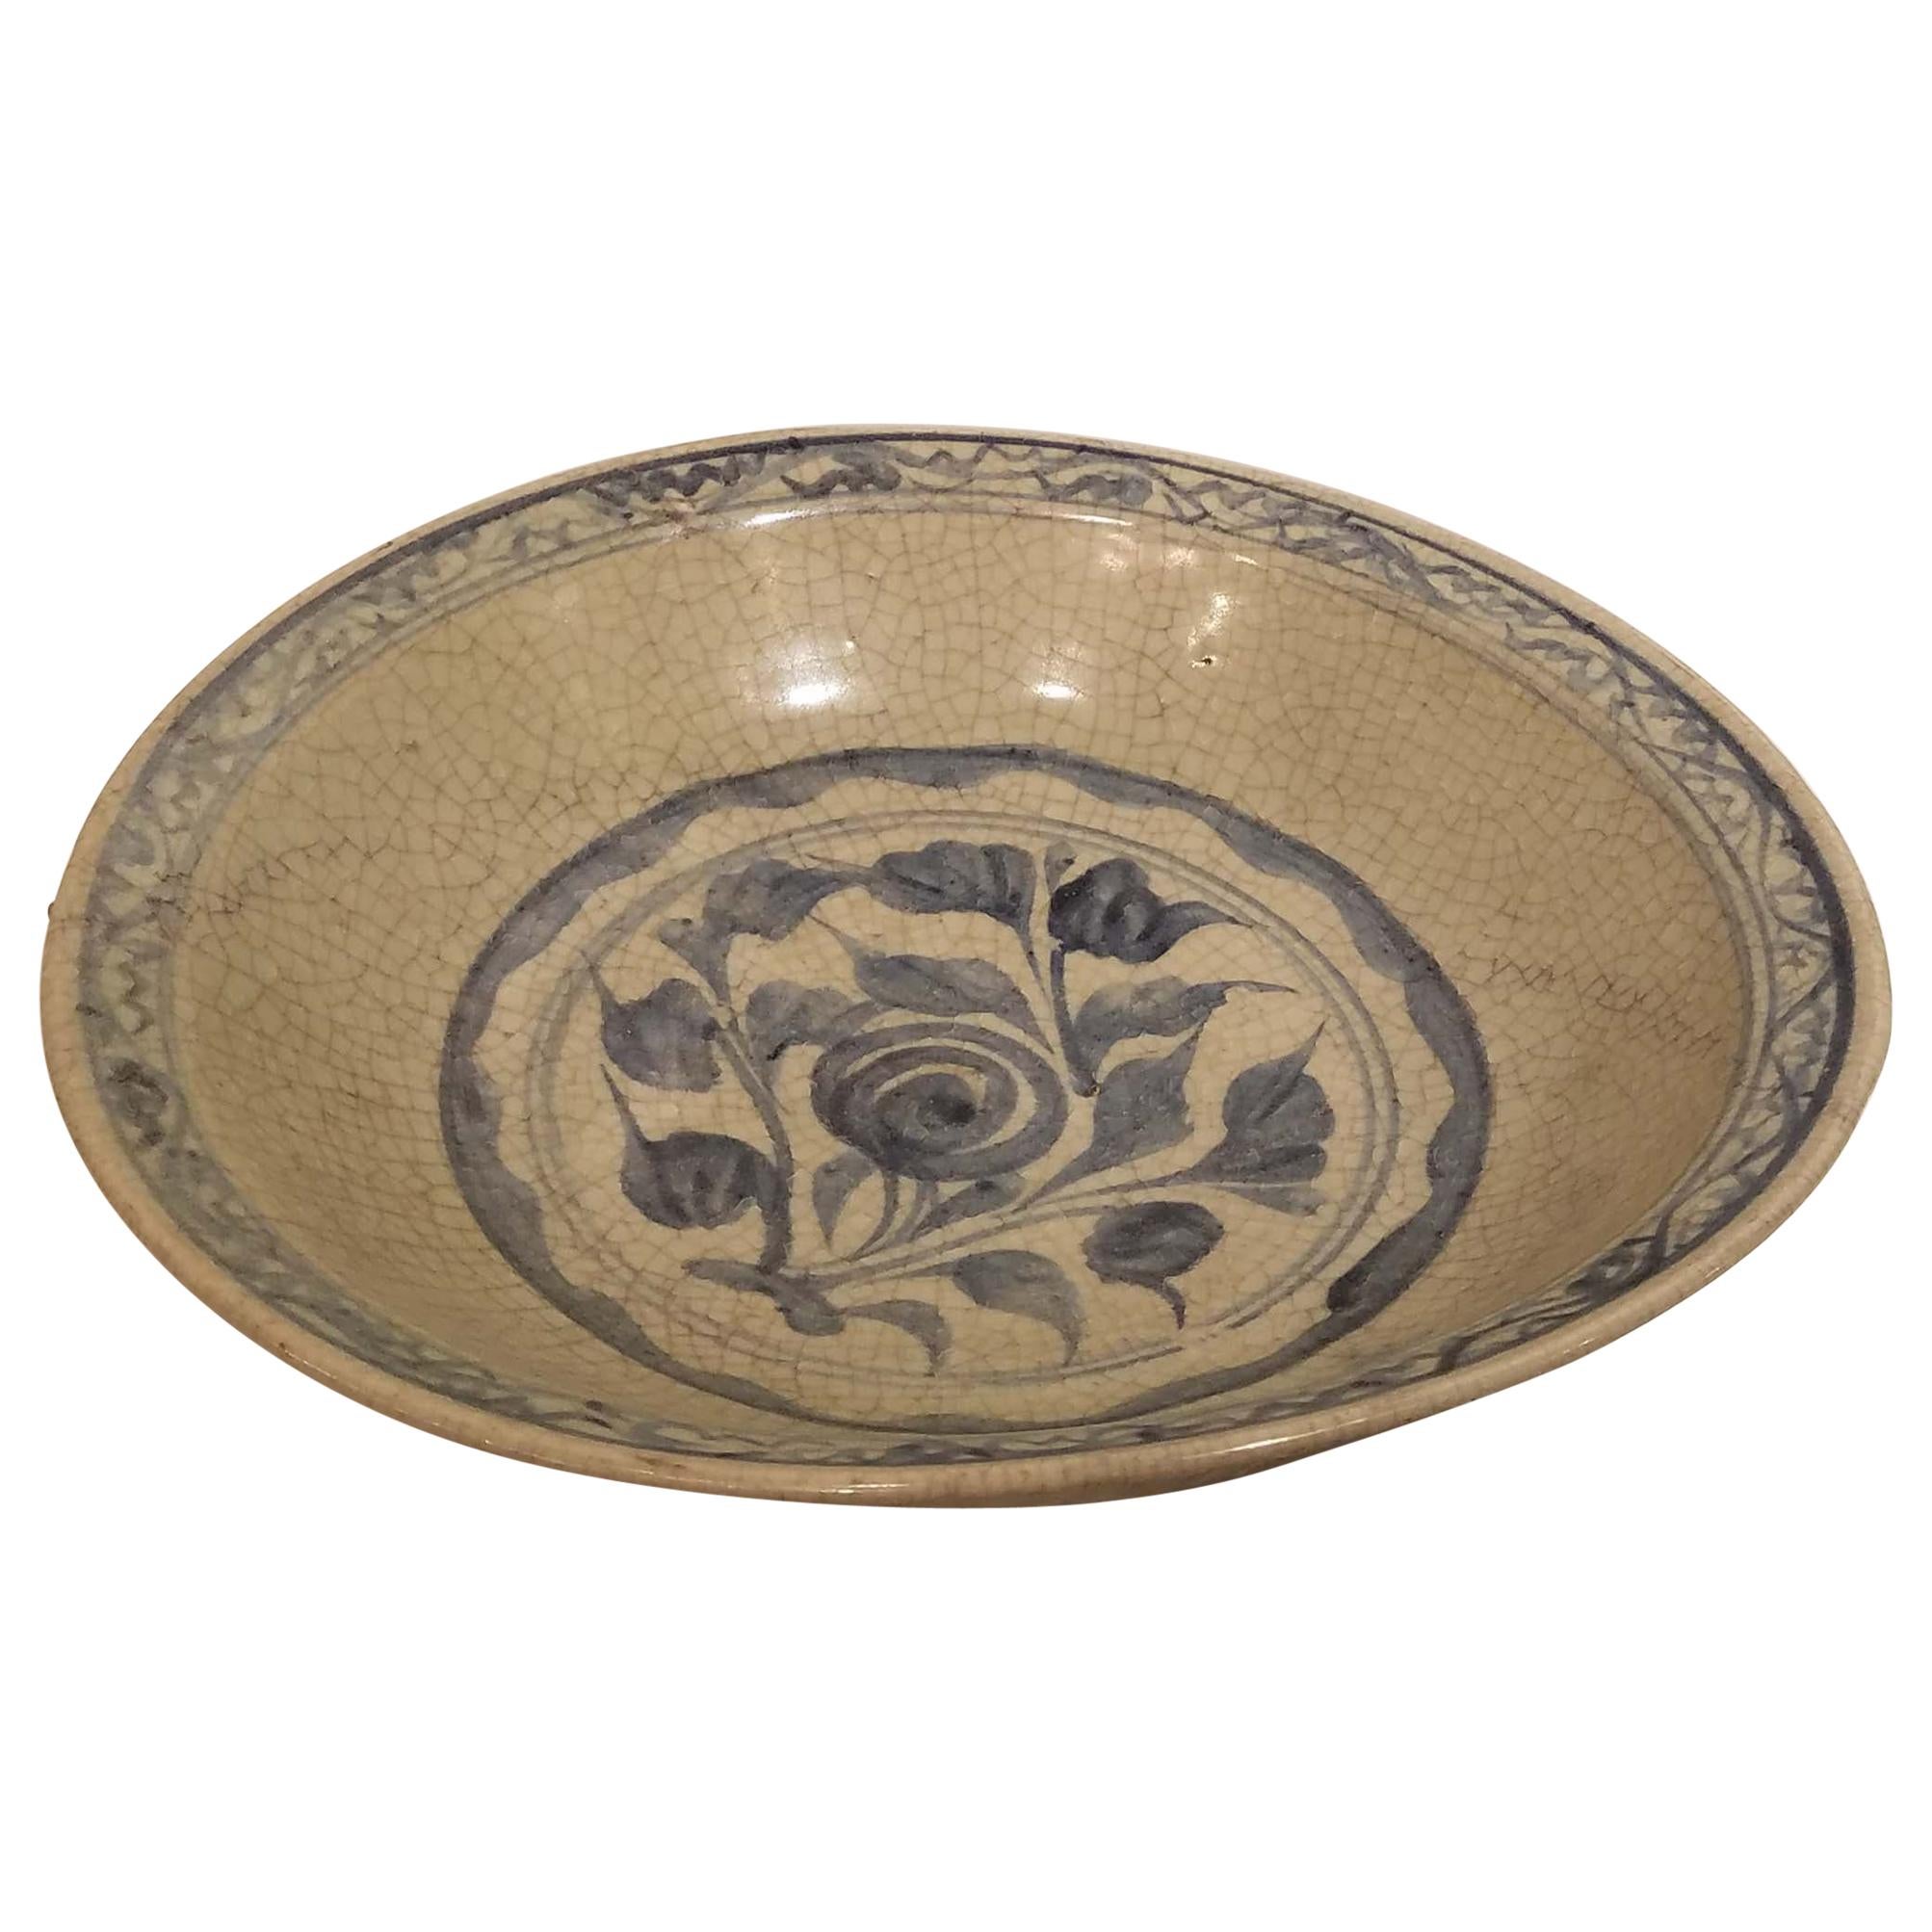 Ming Dynasty Chinese Porcelain Celadon Bowl